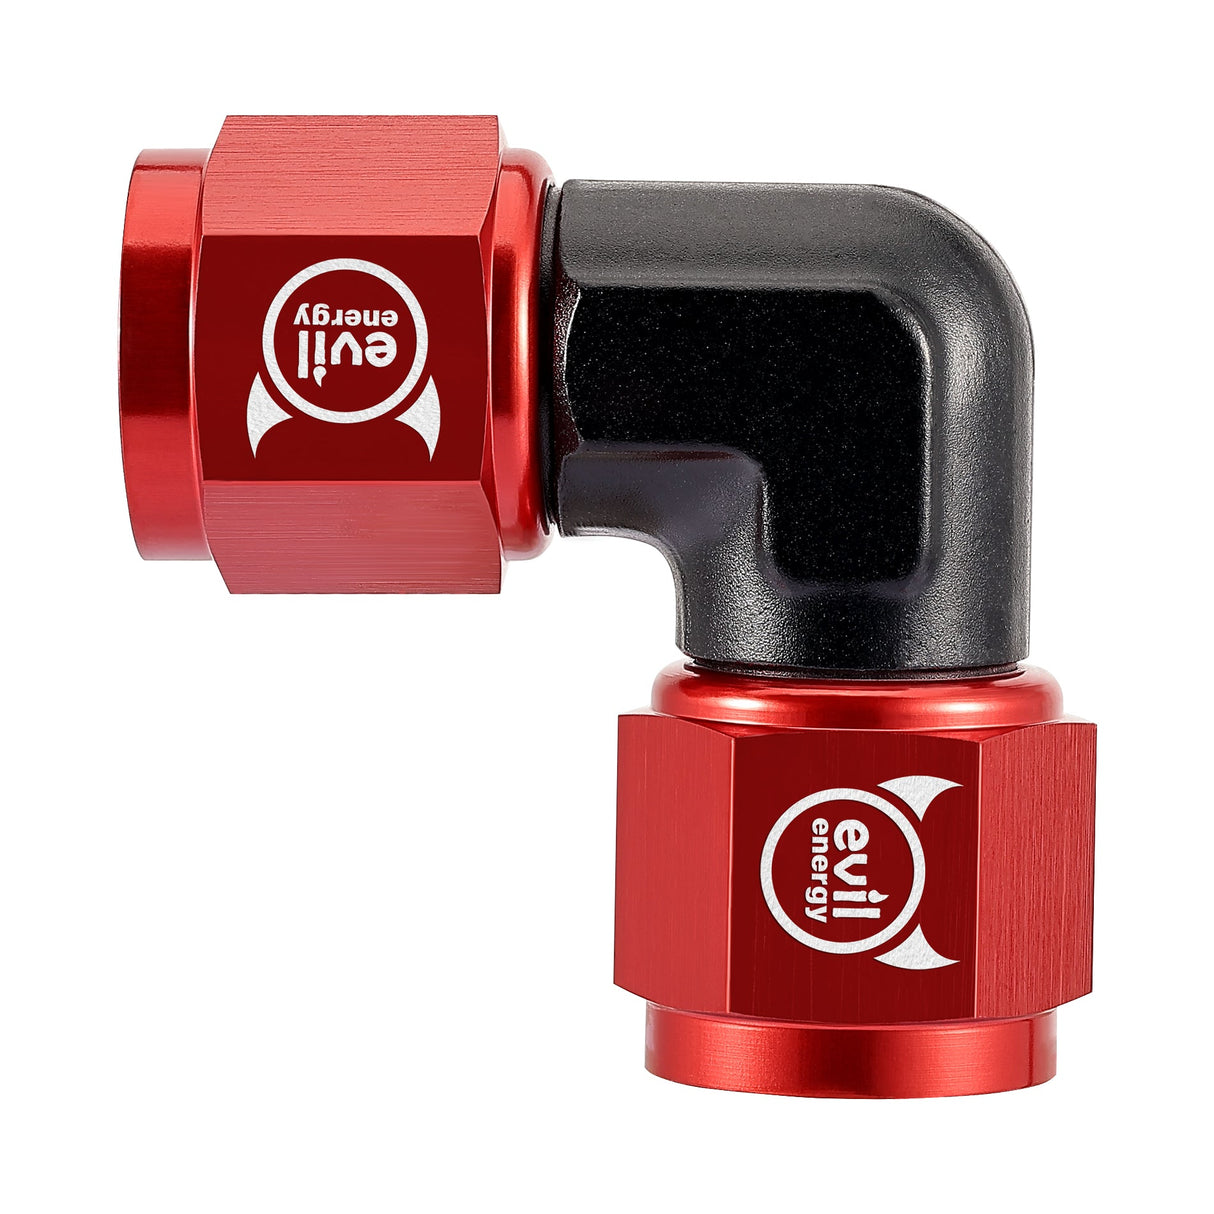 EVIL ENERGY AN Female 90 Degree Low Profile Swivel Coupler Union Red&Black Fitting Adapter Aluminum